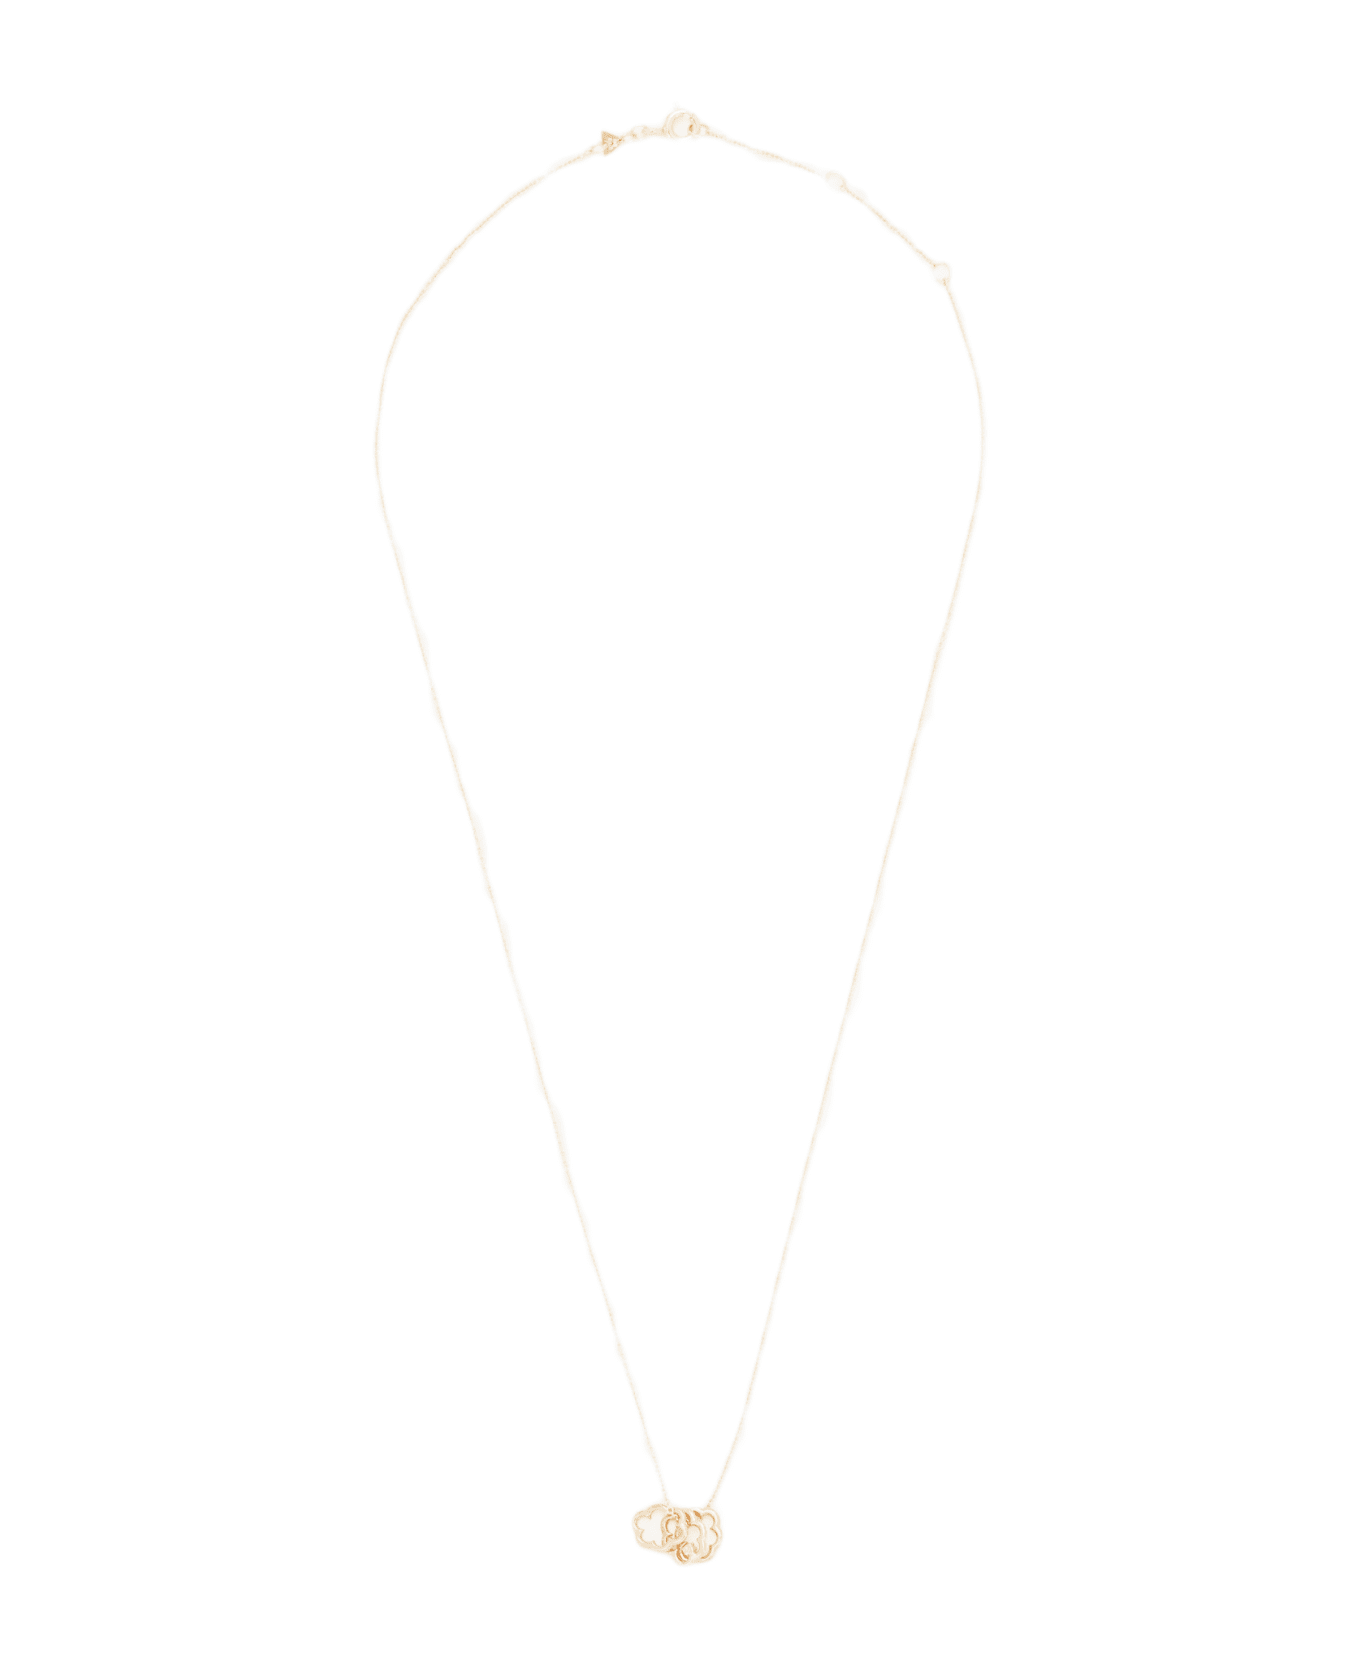 Aliita 9kt Gold With Diamond Nubecita Necklace - Golden ネックレス